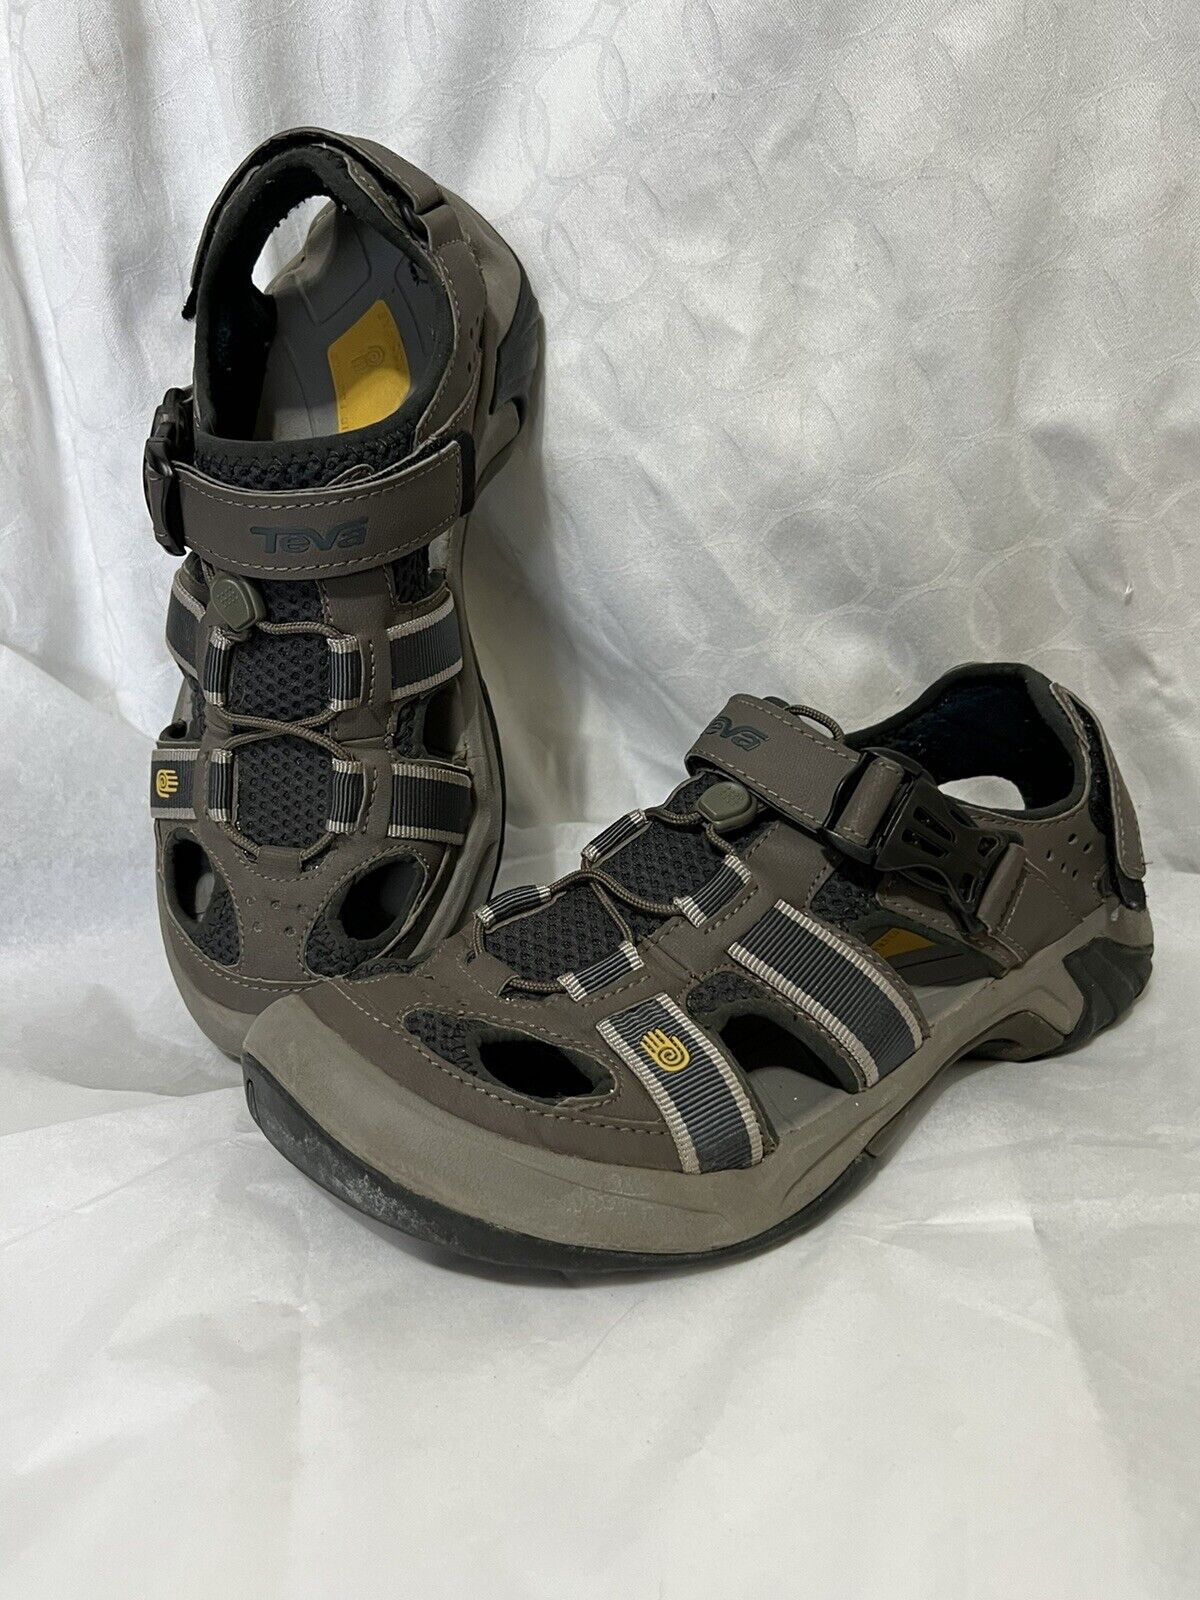 Malaise Grondig Pasen Teva 6148 Mens Omnium Water Sport Hiking Sandals Size 8 M Closed Toe Shoes  | eBay